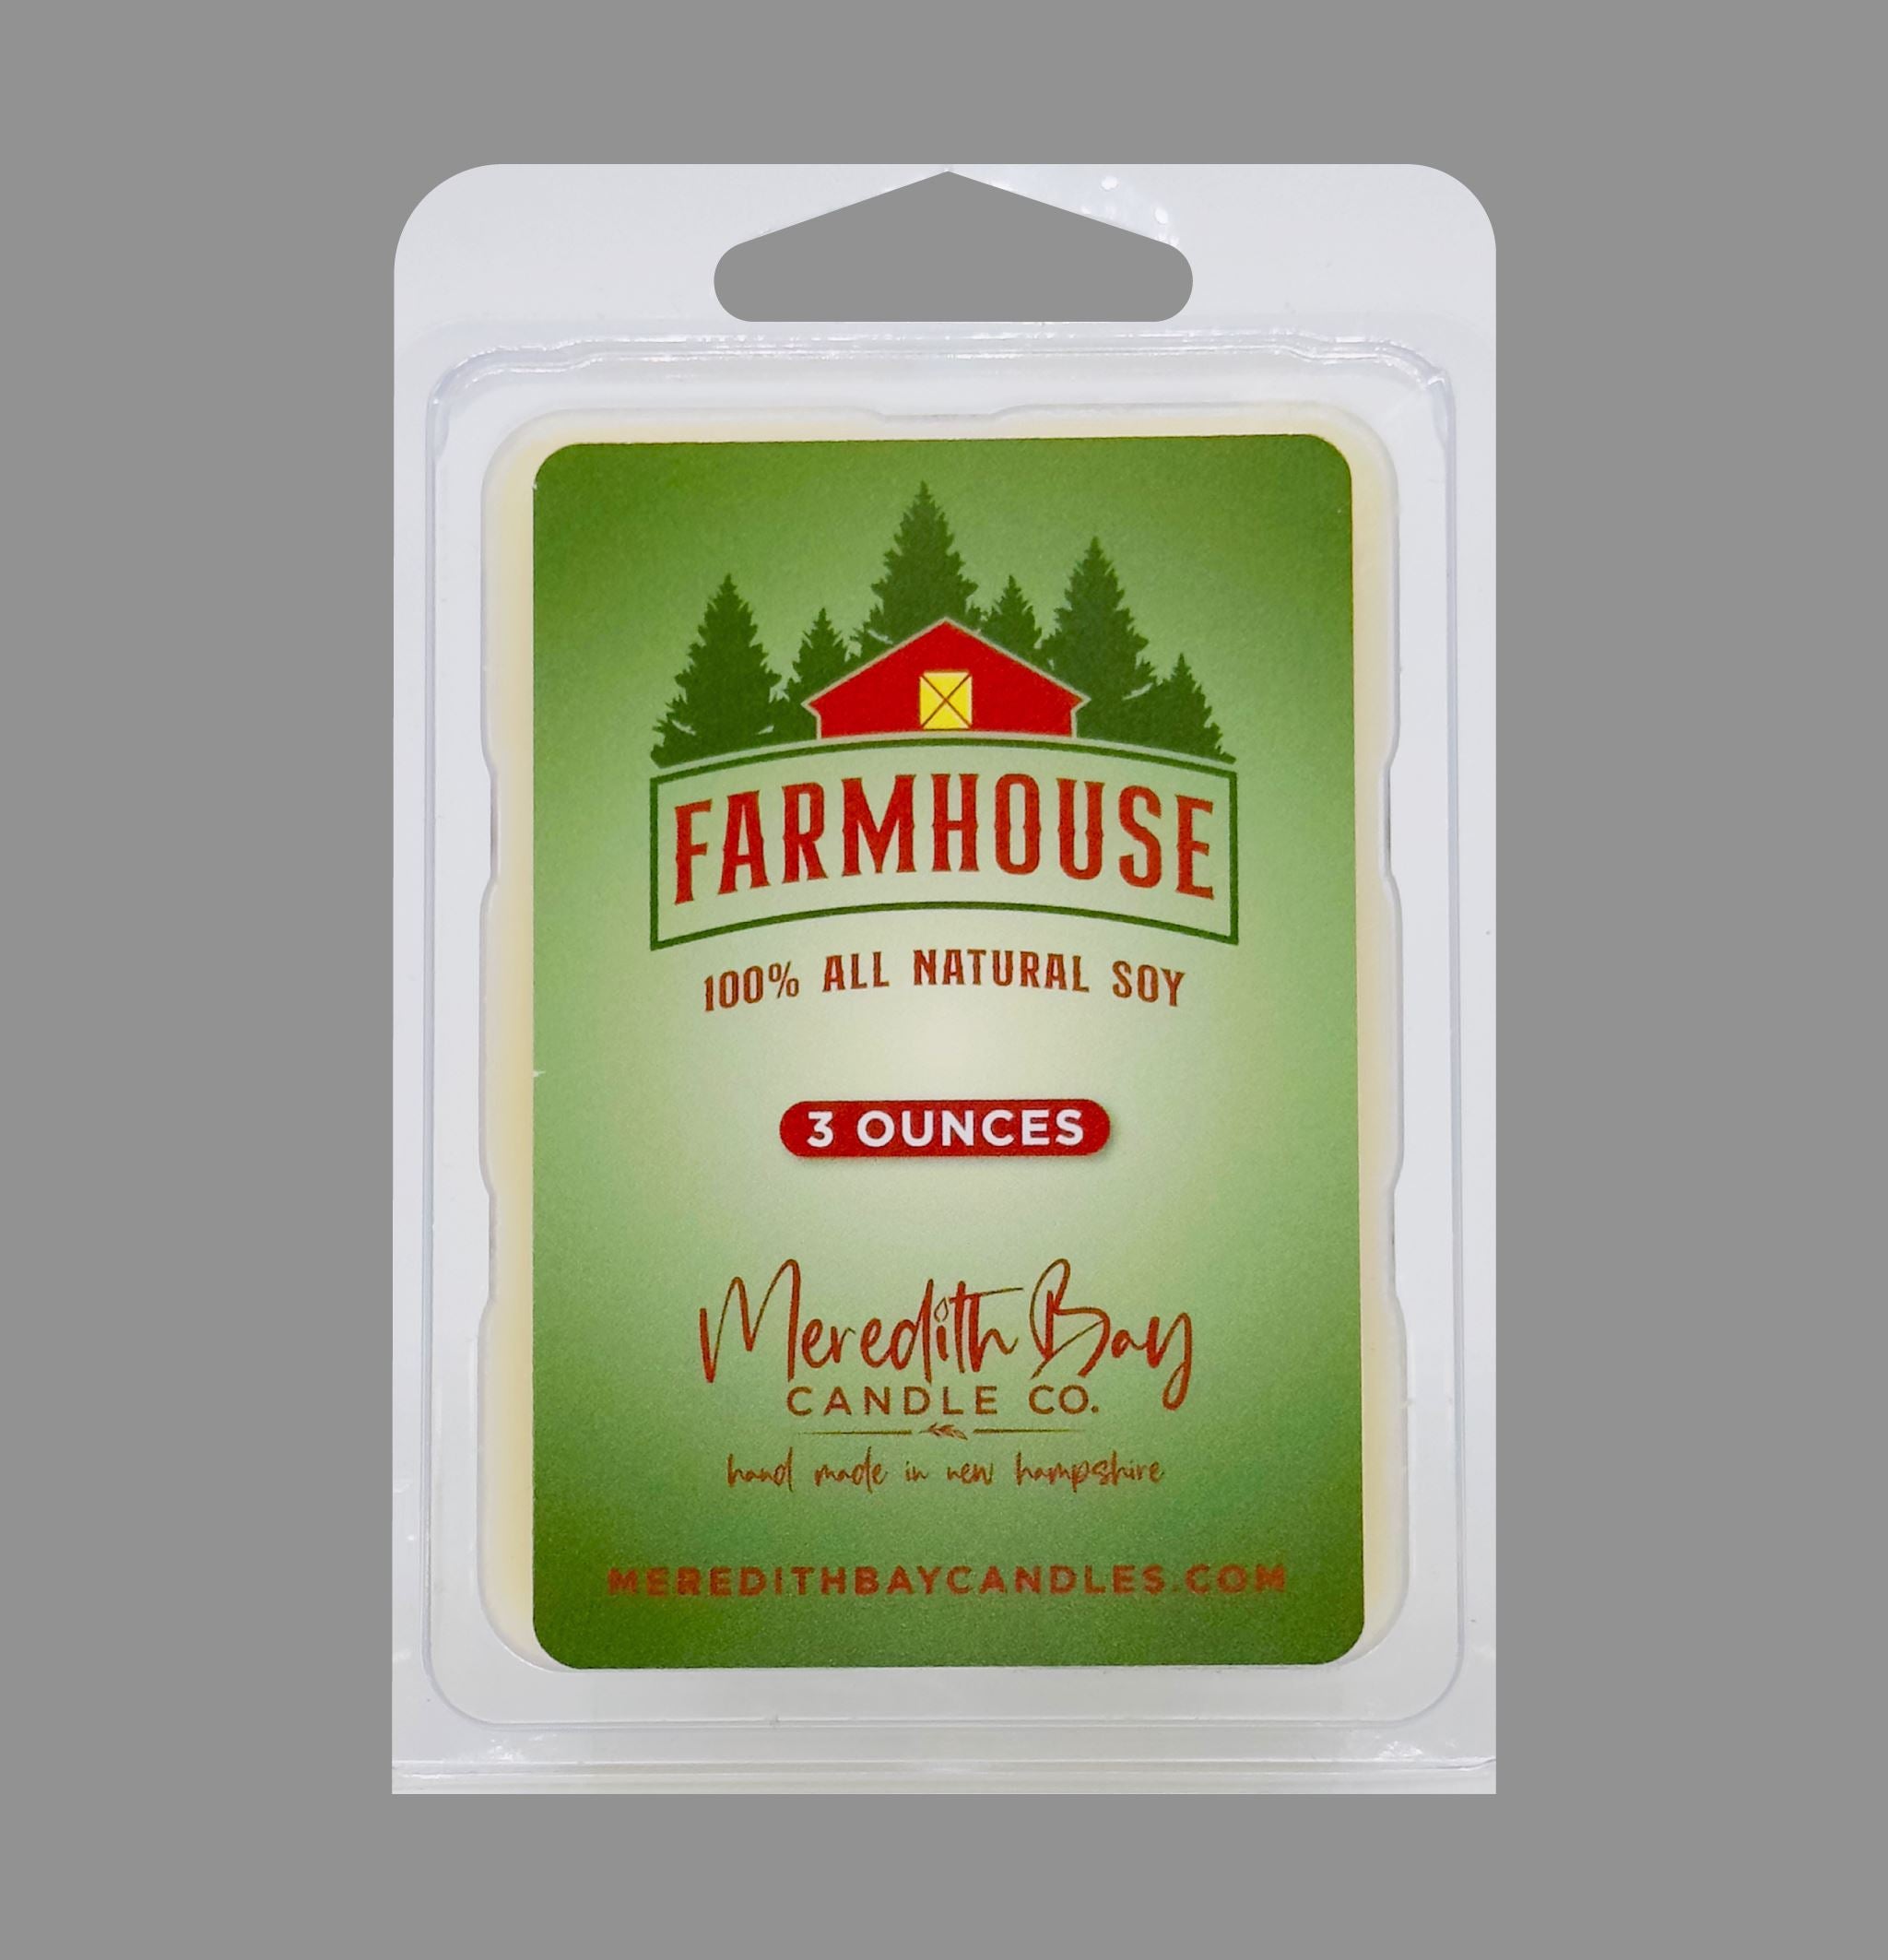 Farmhouse Wax Melt Meredith Bay Candle Co 